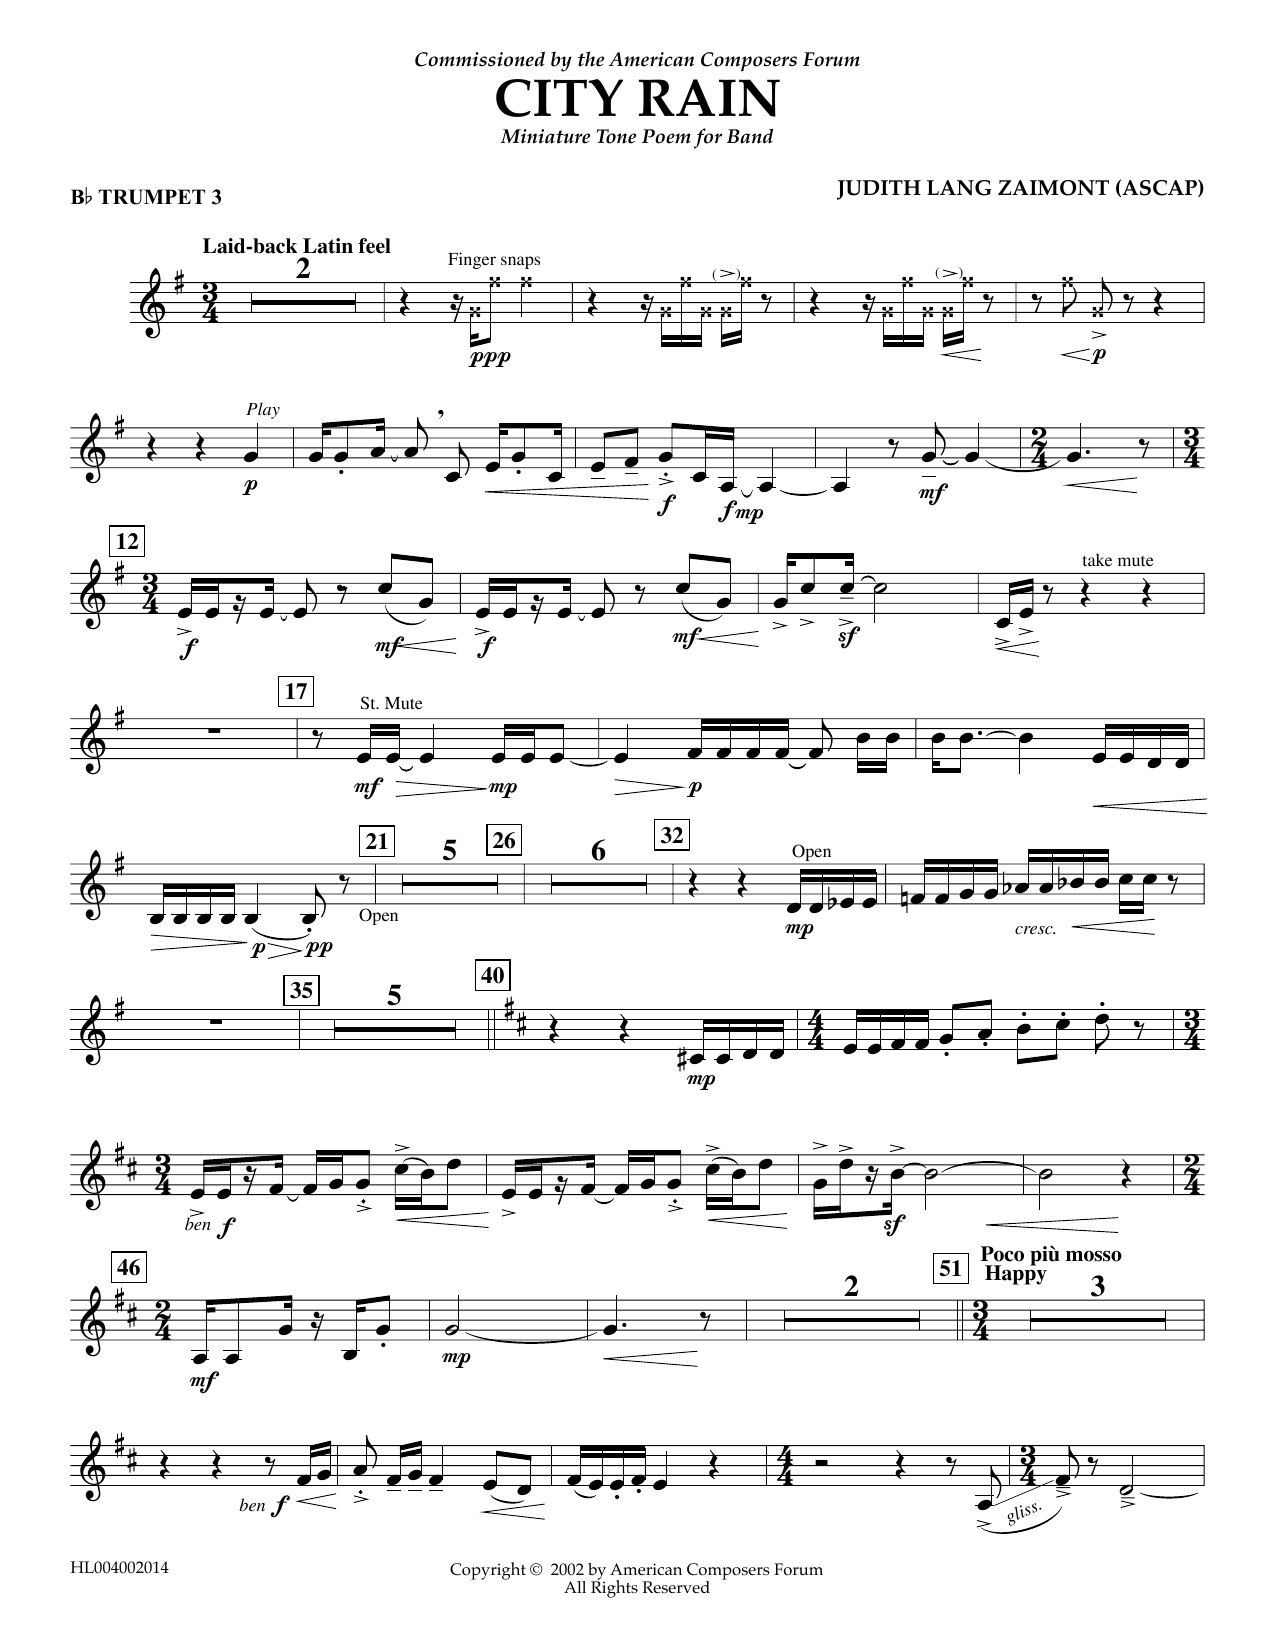 Download Judith Zaimont City Rain - Bb Trumpet 3 Sheet Music